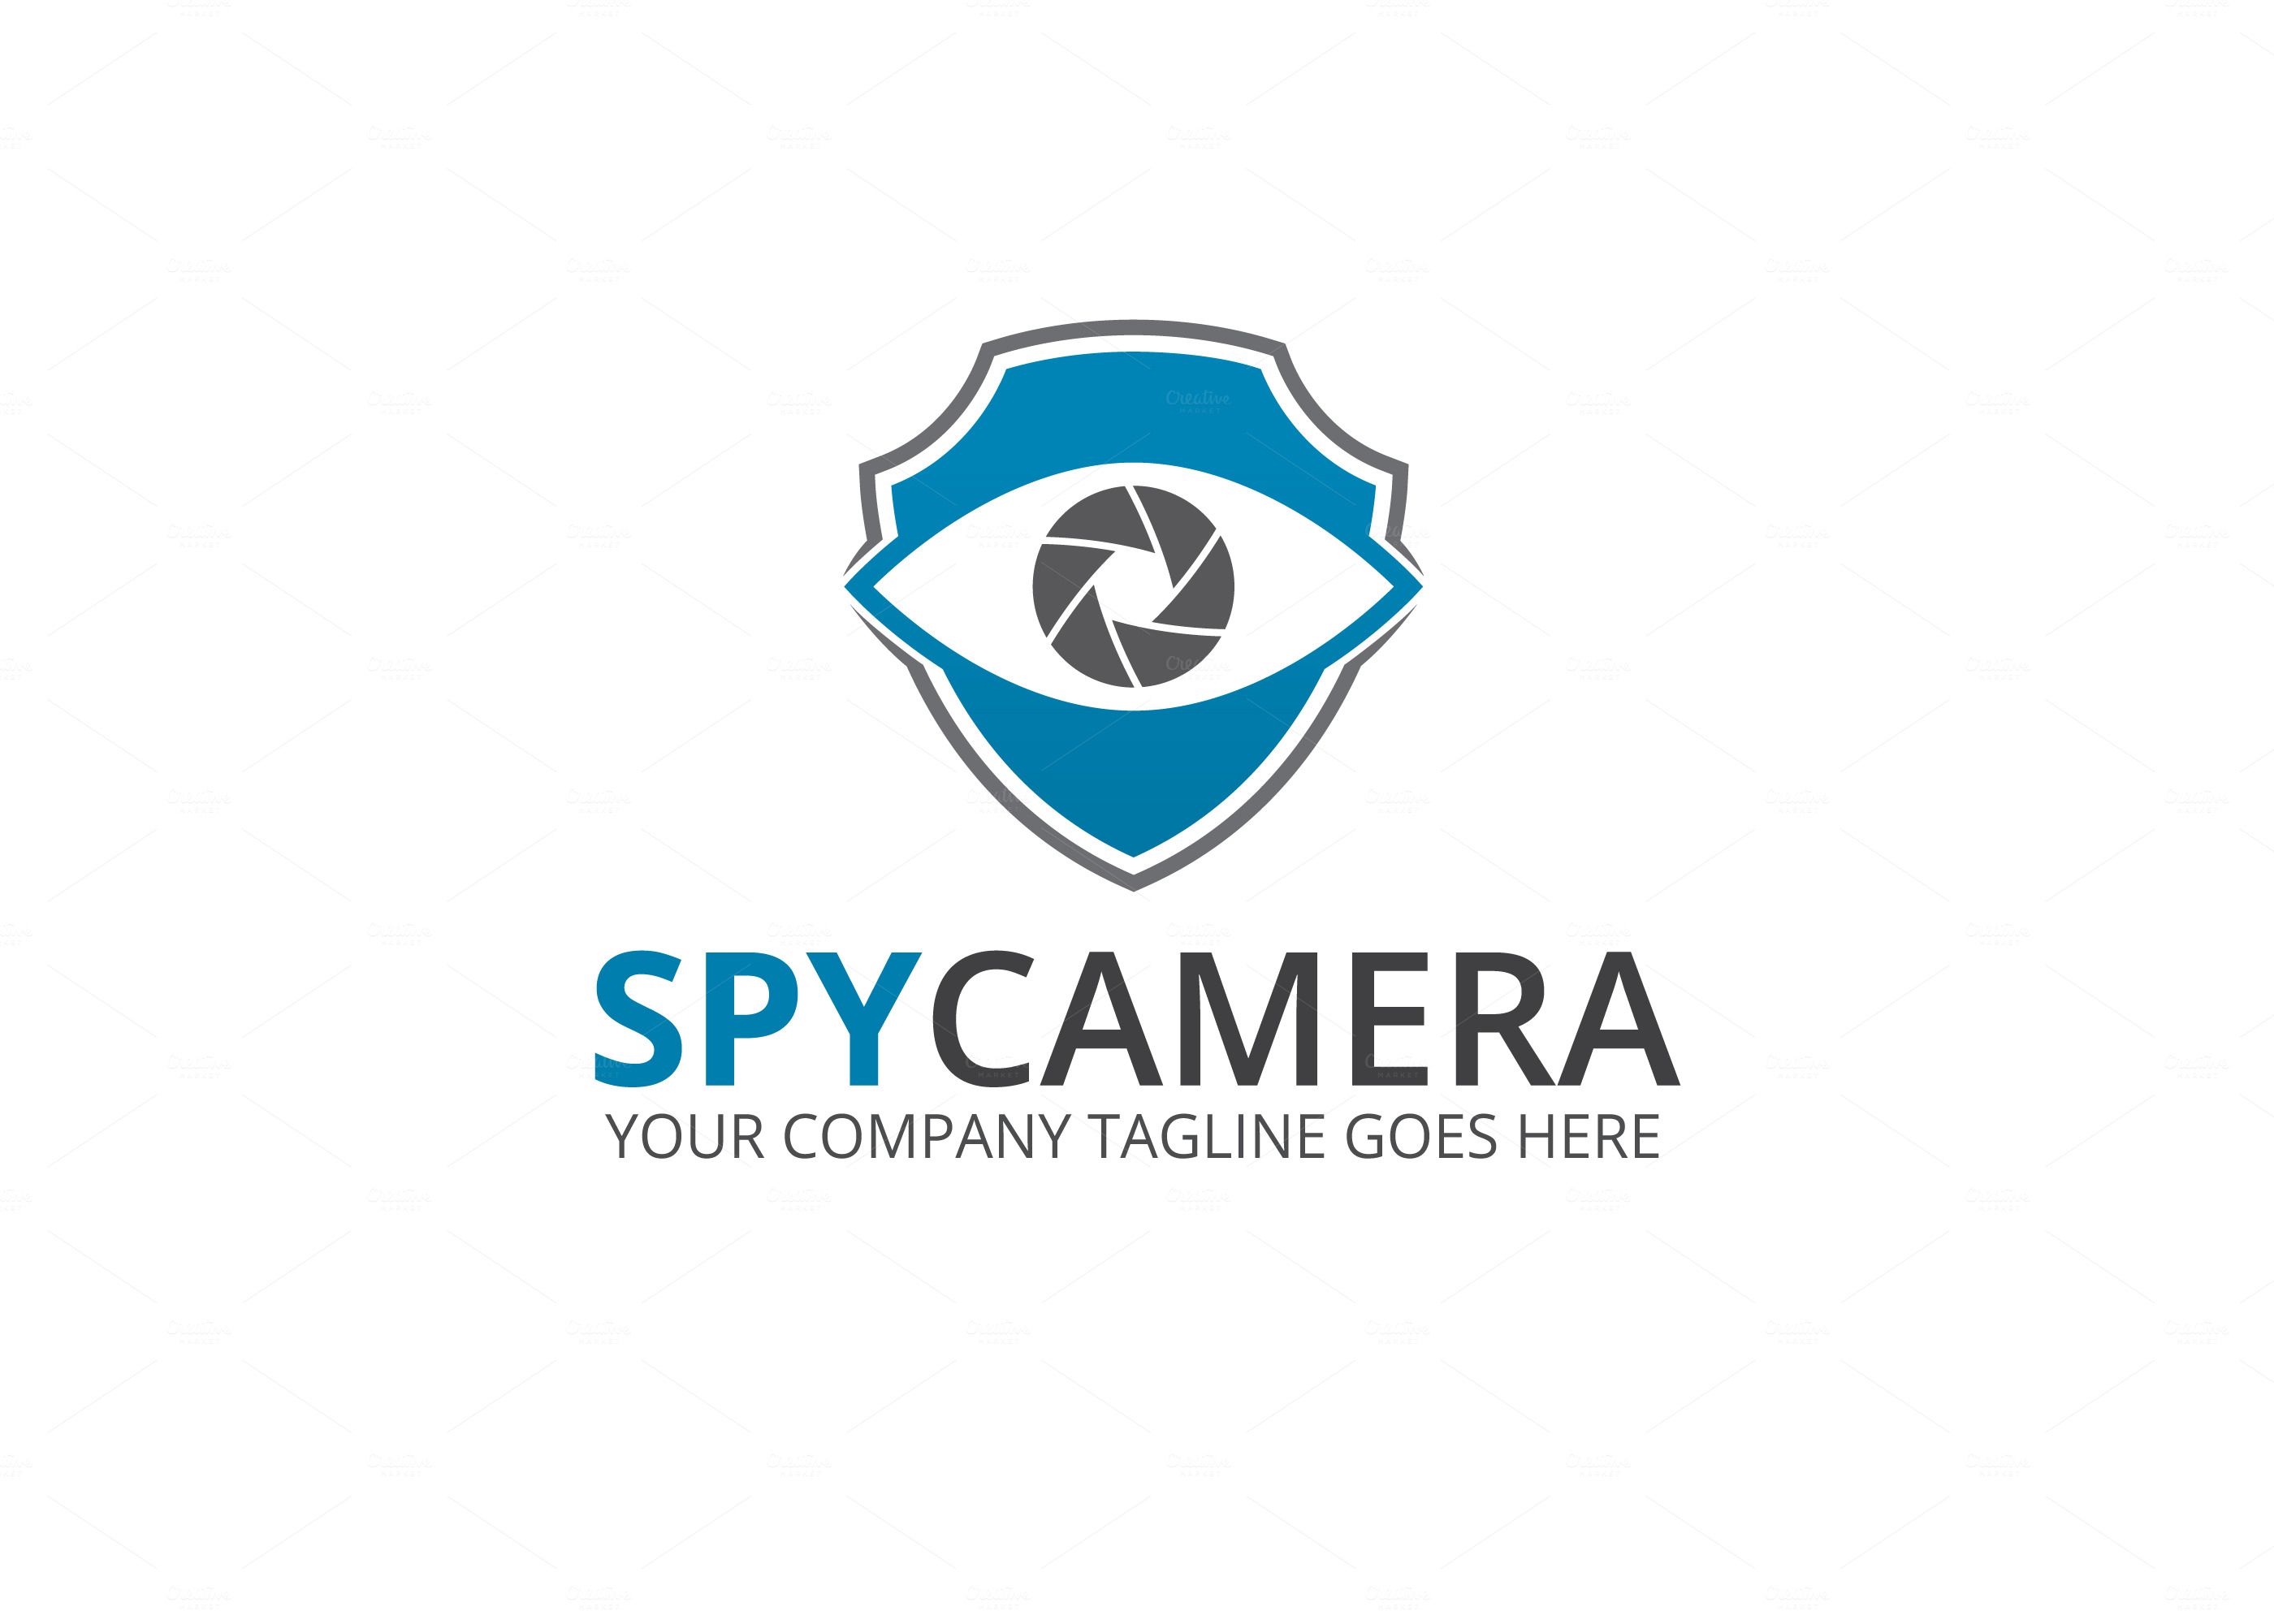 Spycamera logo